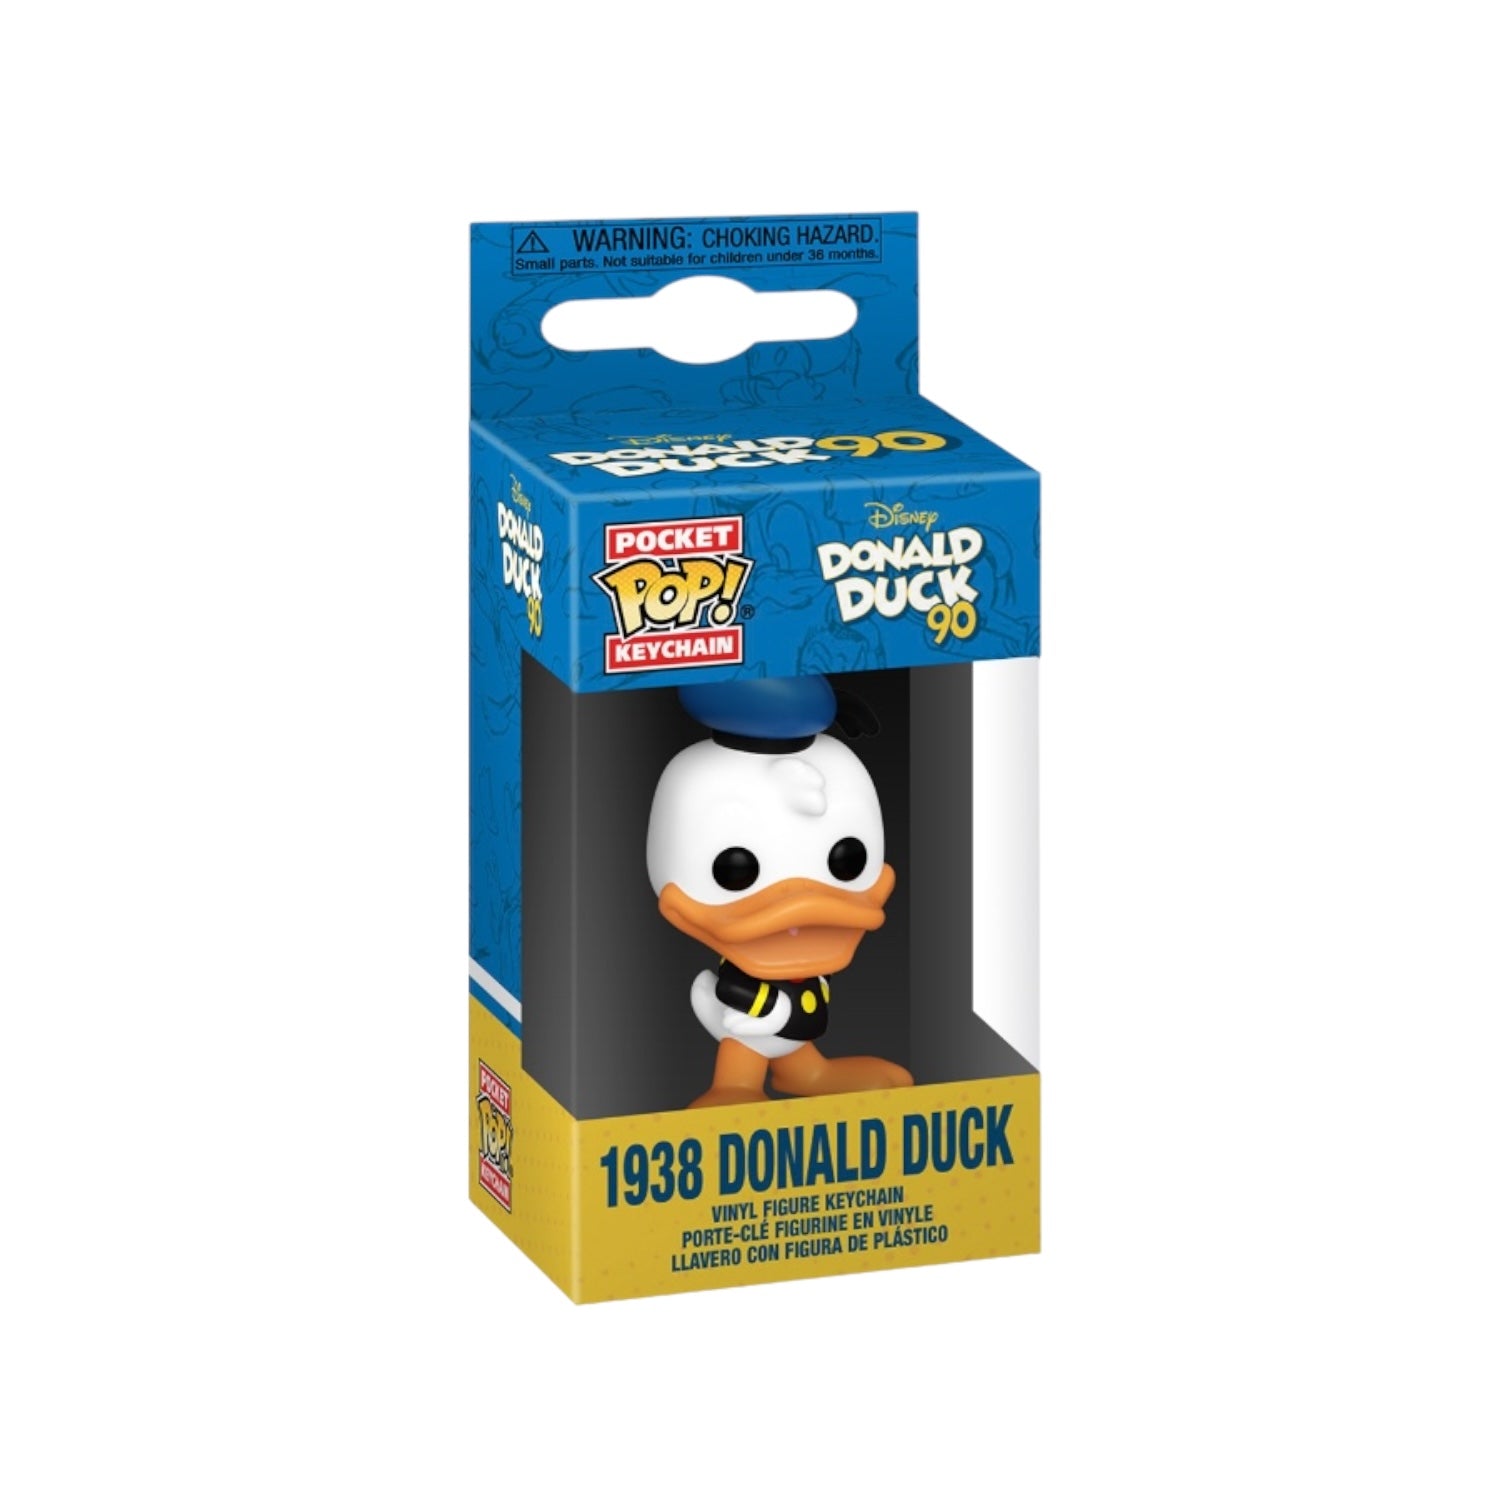 1938 Donald Duck Pocket Pop Keychain  - 90th Anniversary